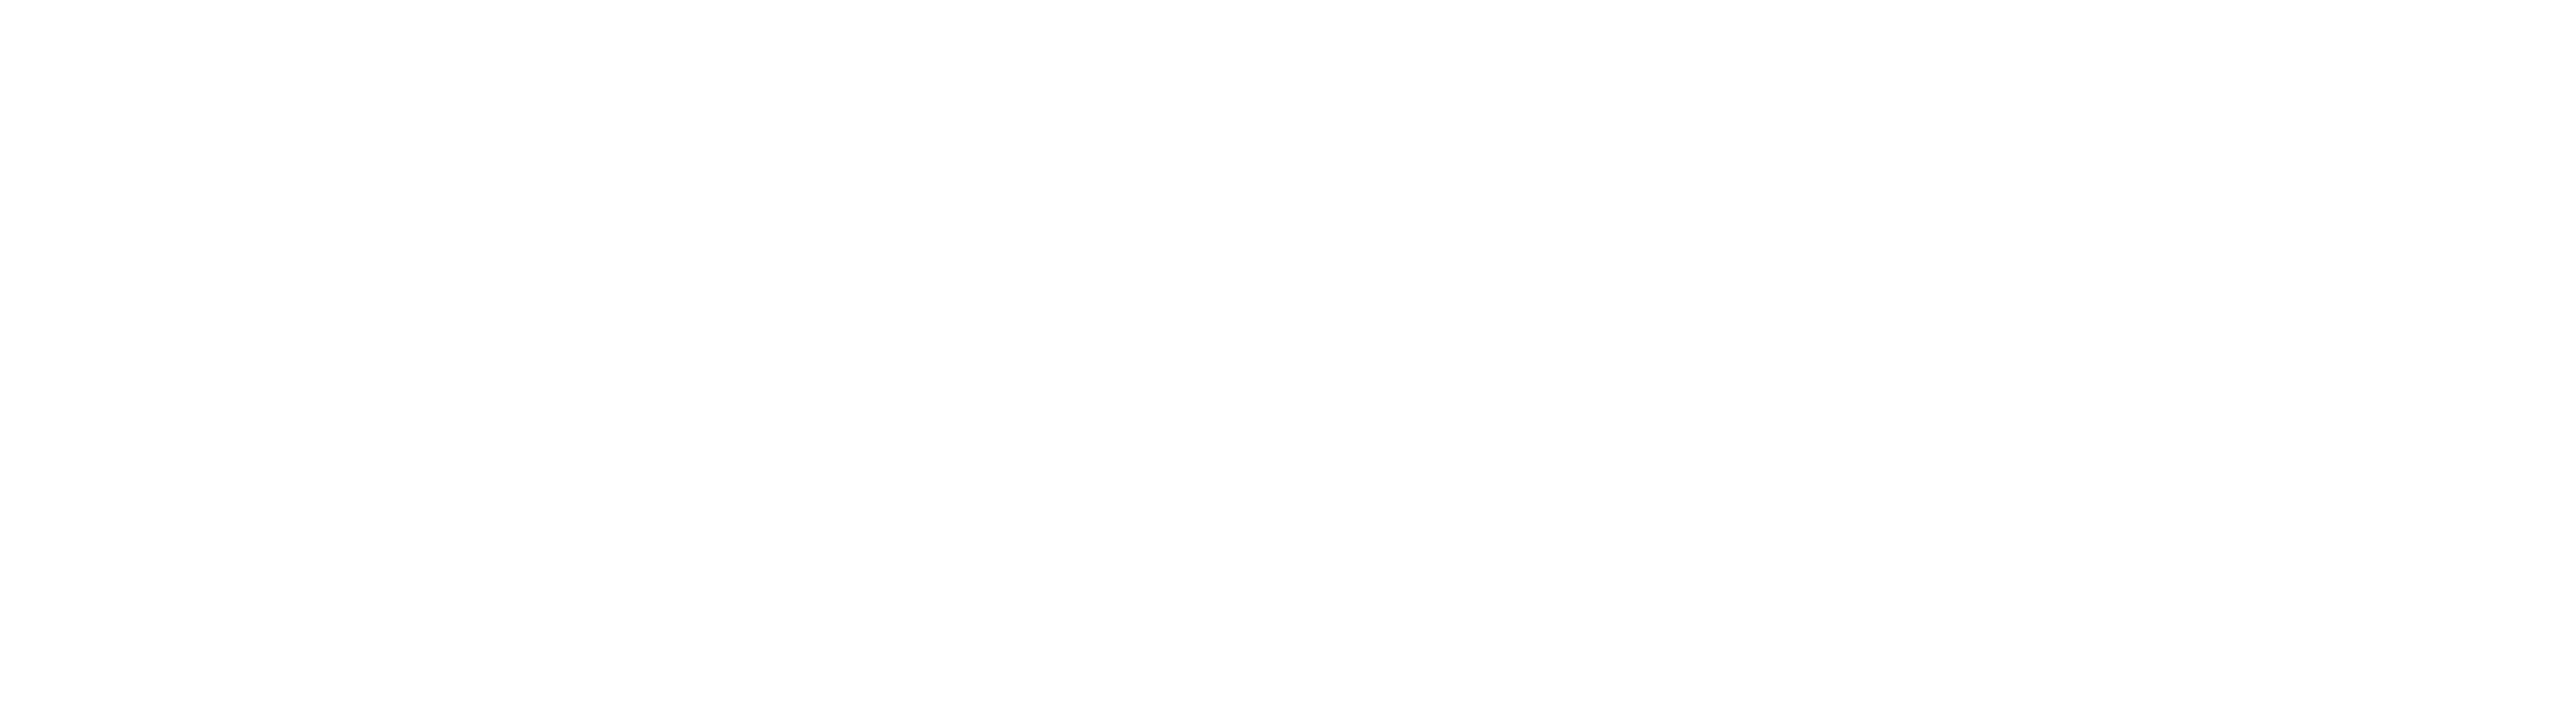 Insurance Innovators Fraud & Claims | Insurance conference logo